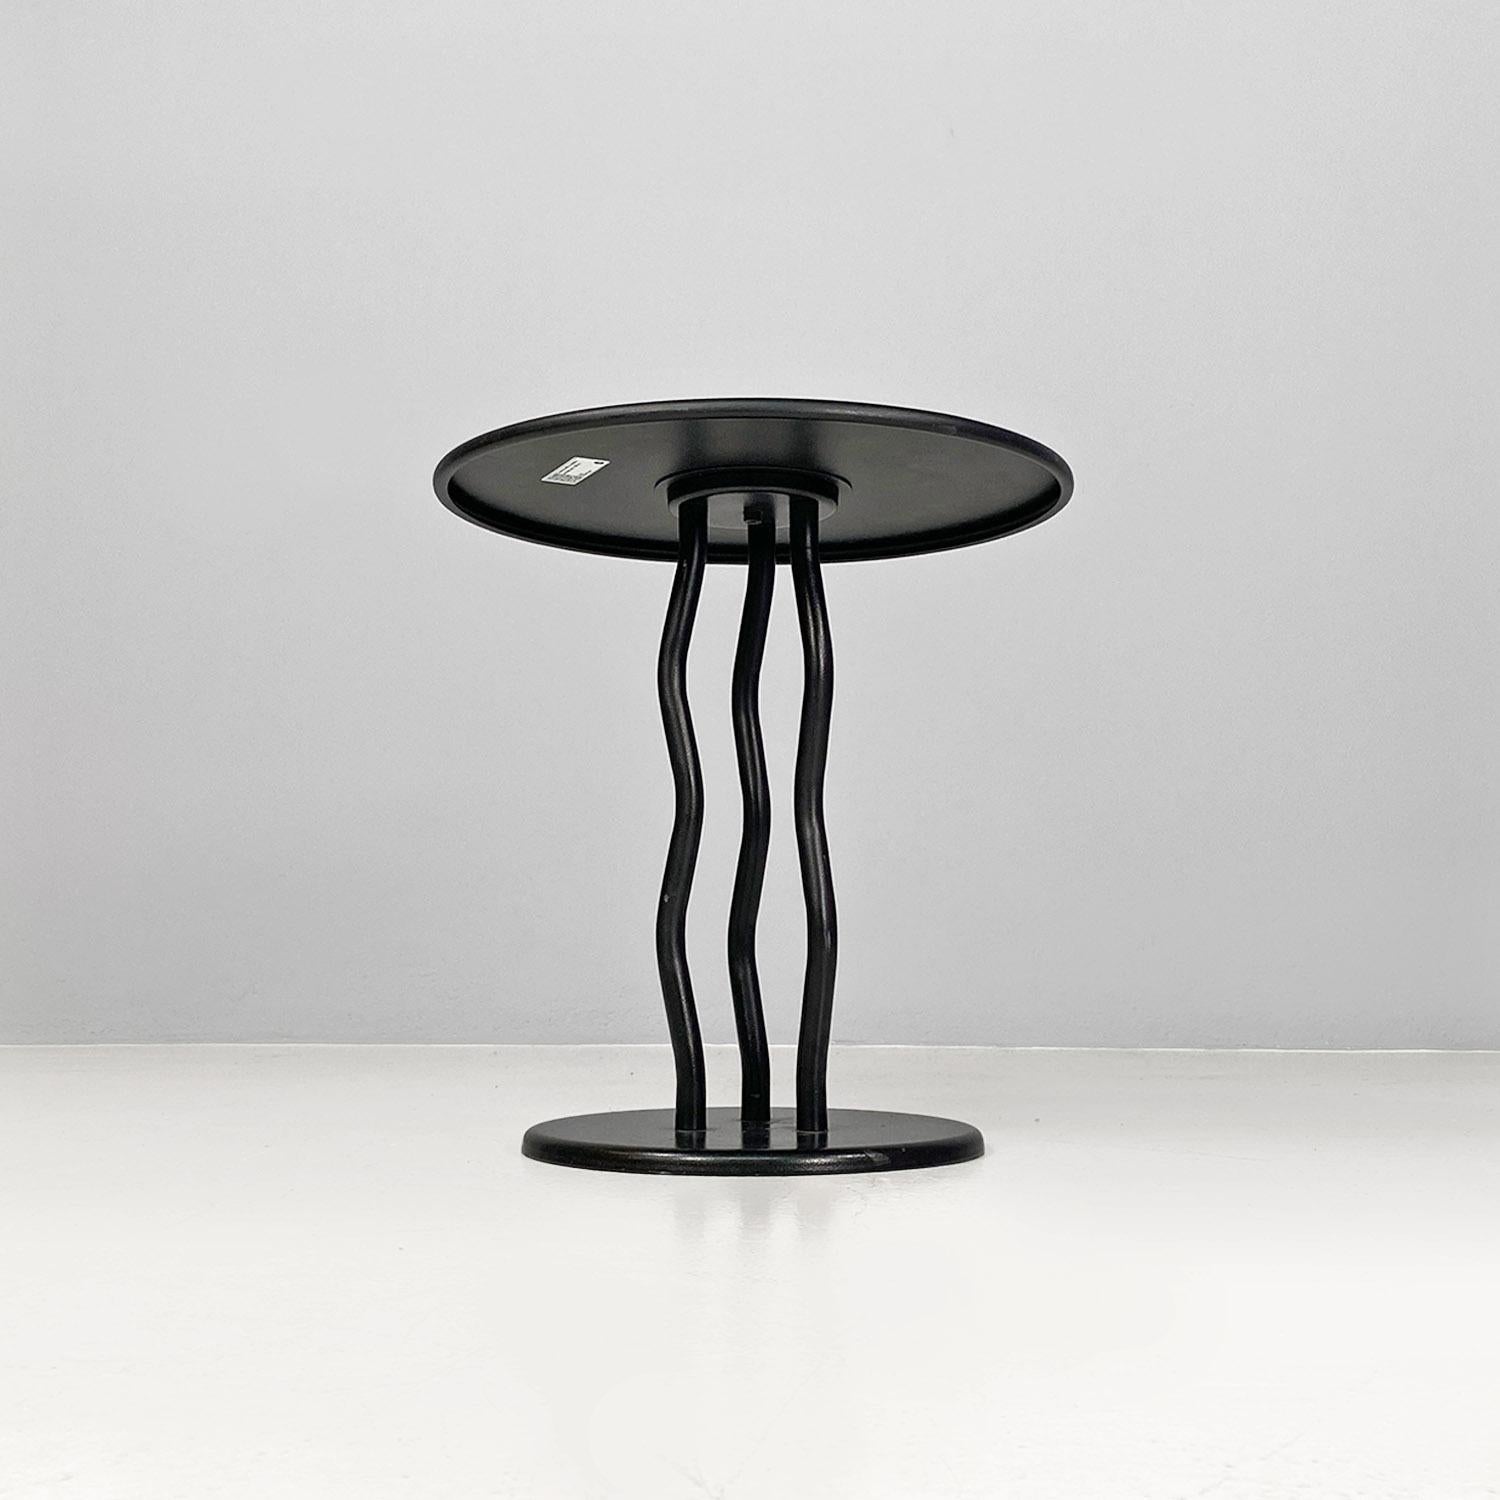 Late 20th Century Italian modern black metal round coffee table with three vawy legs, 1980s